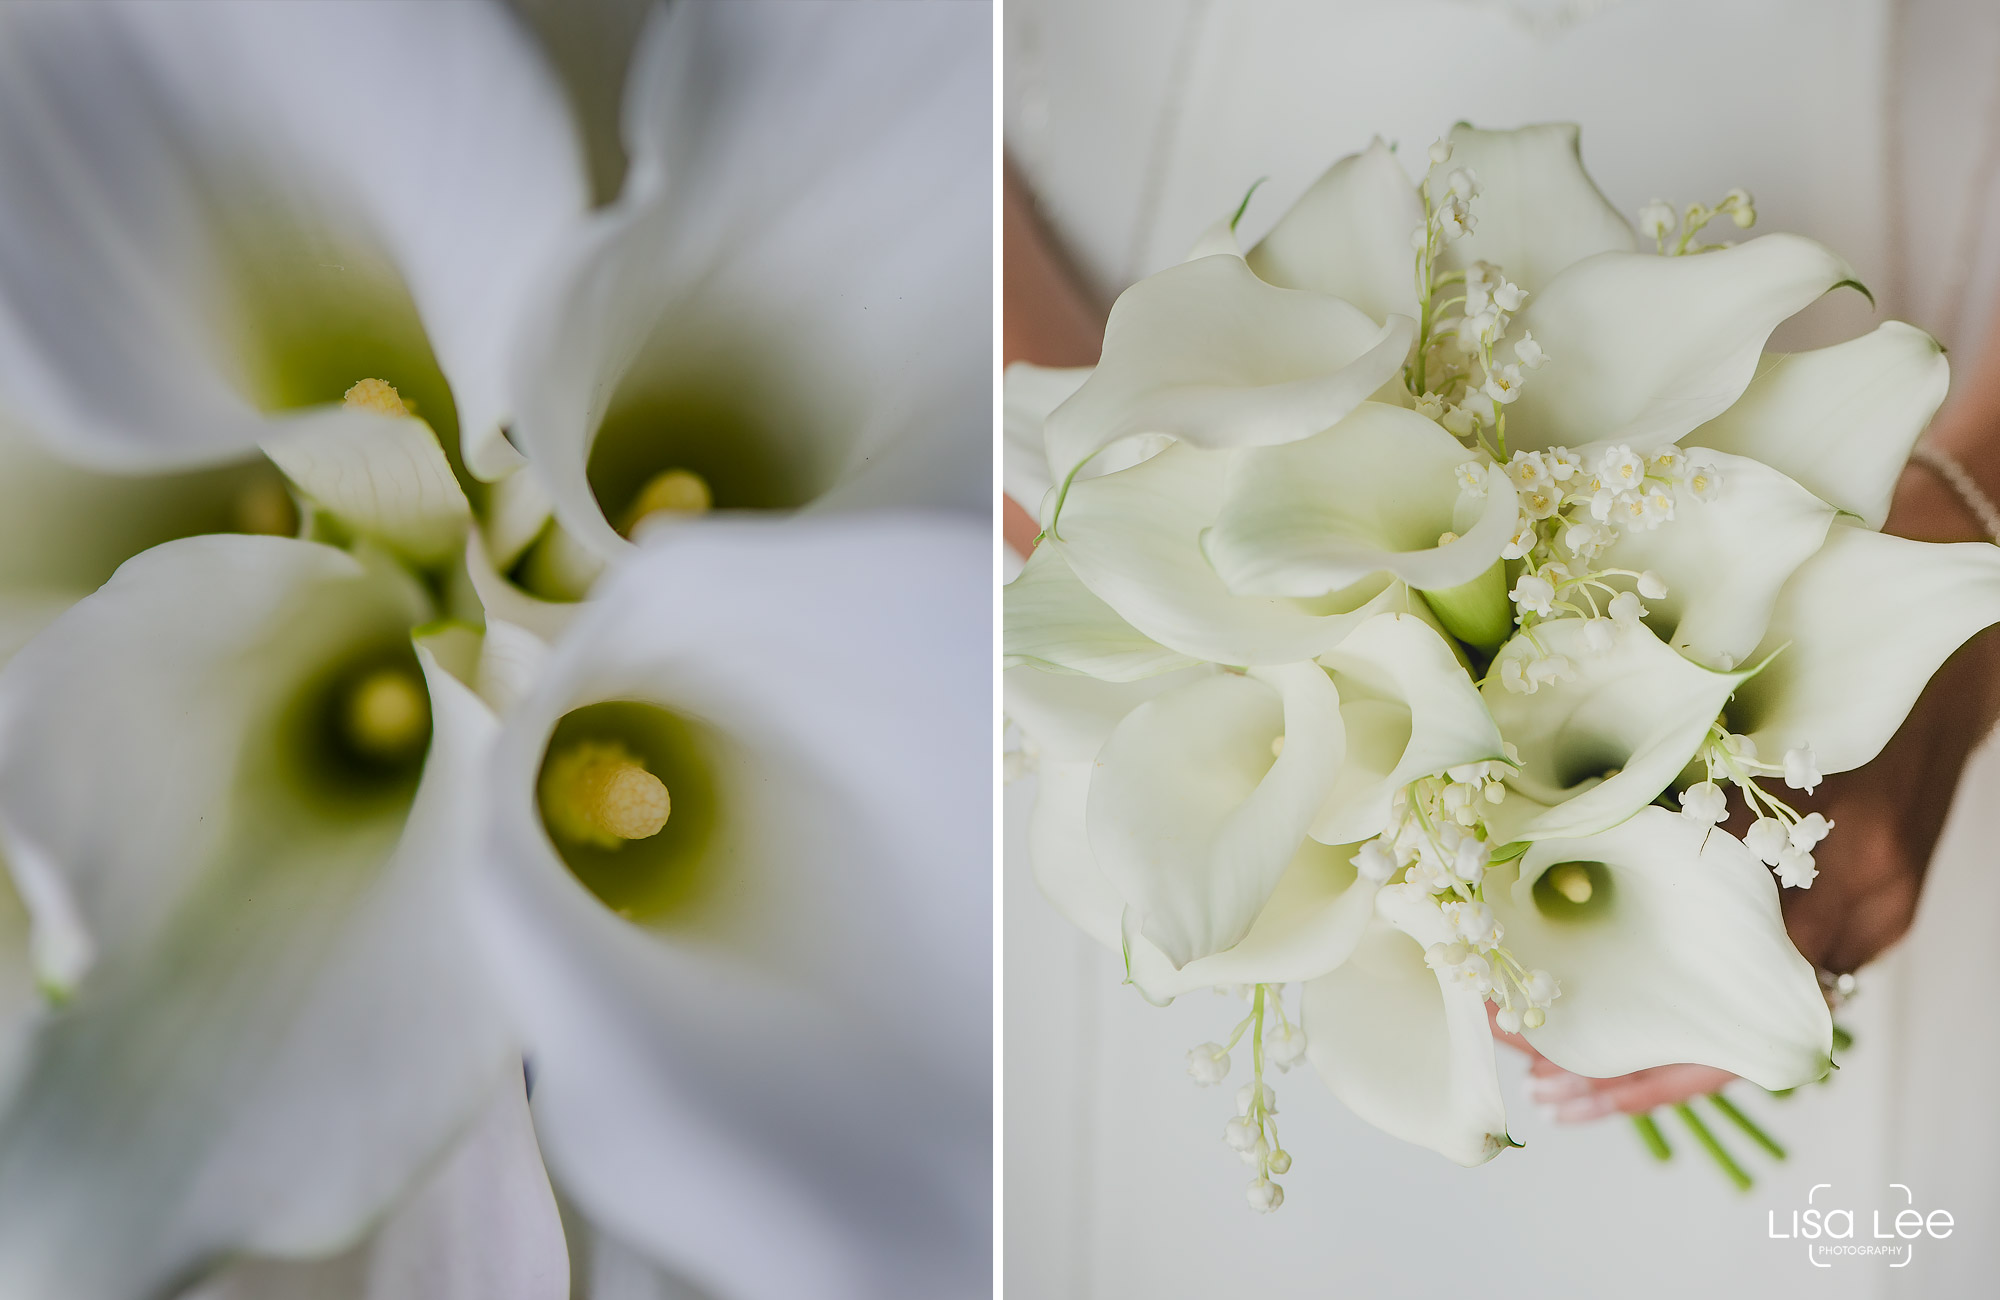 lisa-lee-wedding-photography-christchurch-dorset-flowers3.jpg